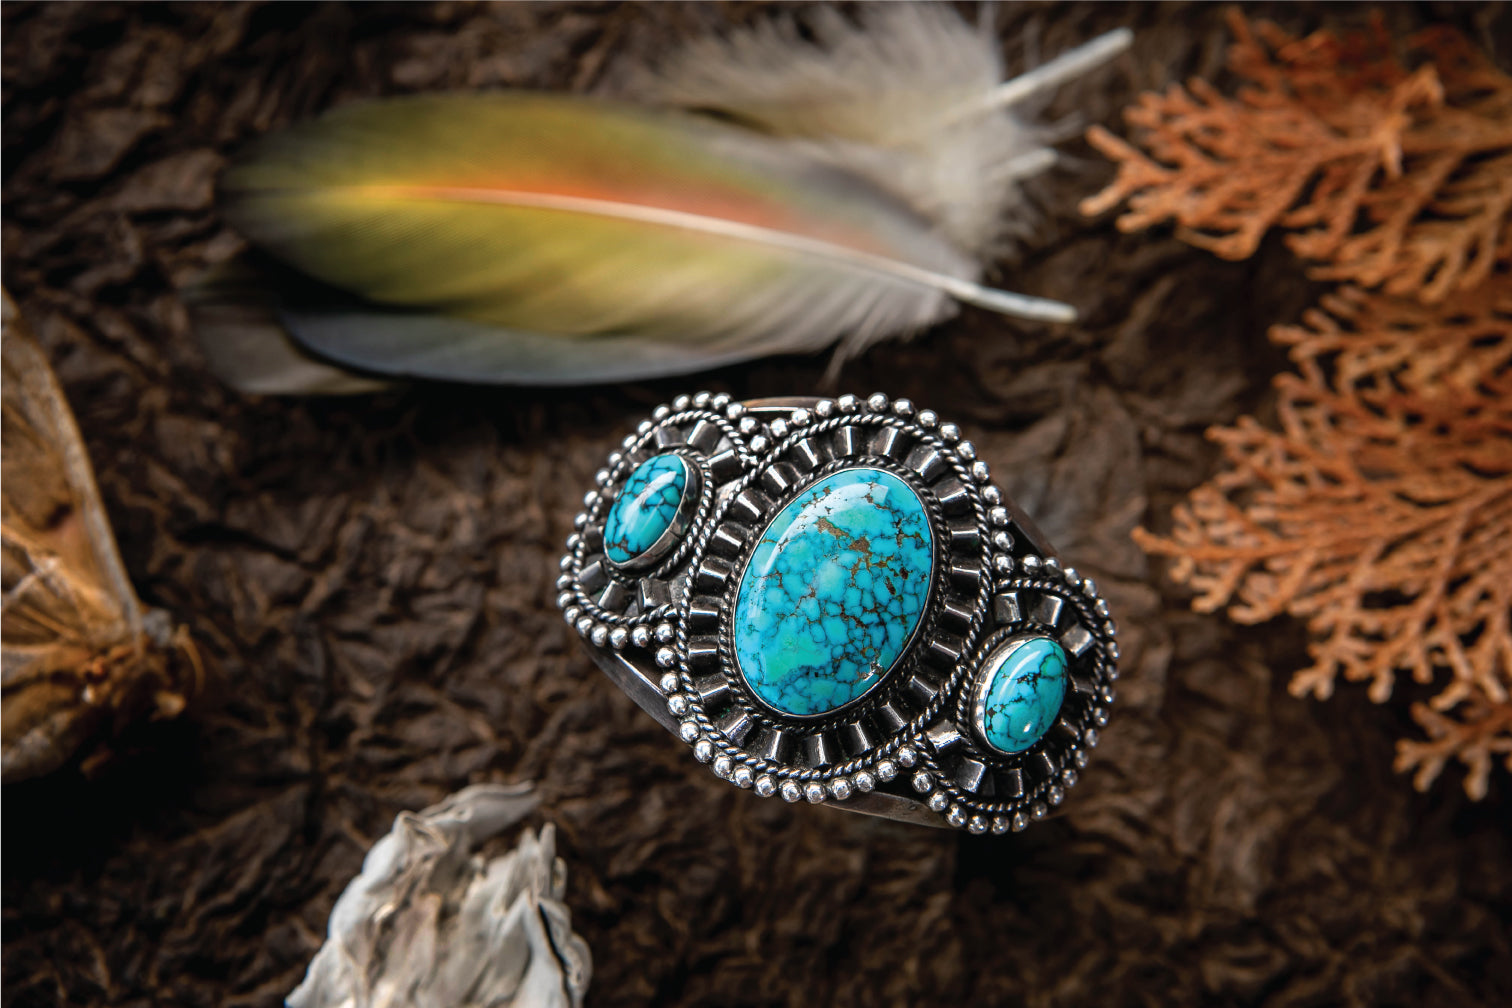 Find Fred Harvey–Era Southwest Jewelry at Peyote Bird Designs in